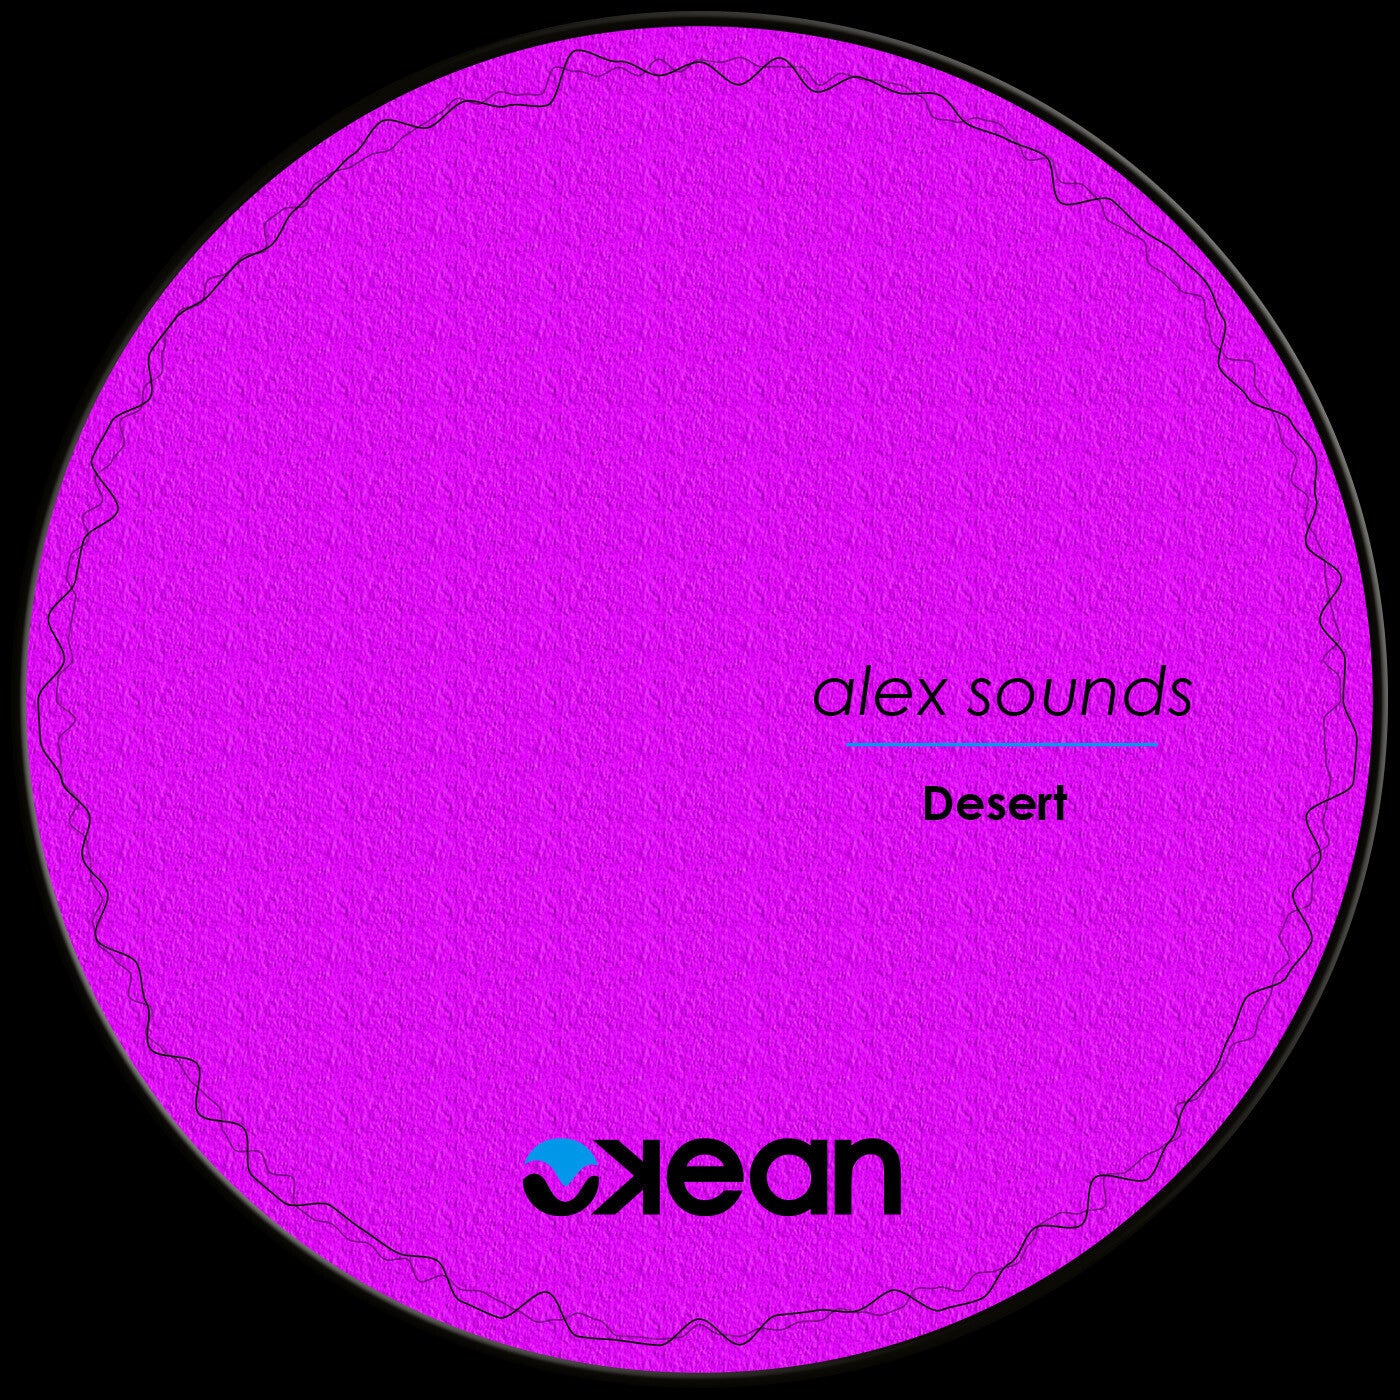 Okean artists & music download - Beatport